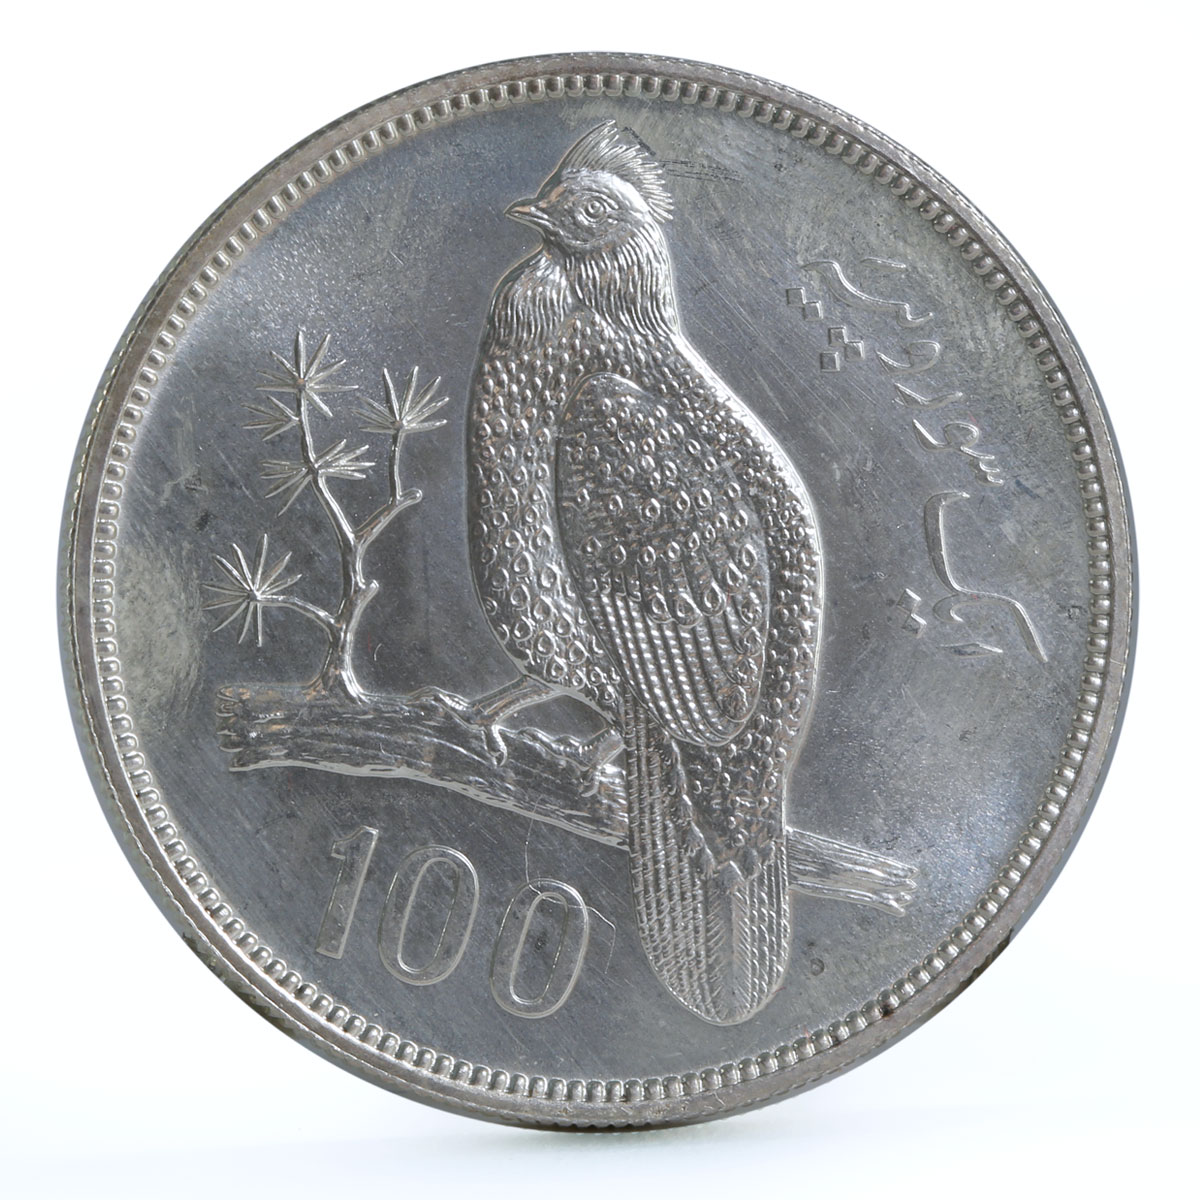 Pakistan 100 rupees WWF Tragopan Pheasant Bird Fauna silver coin 1976